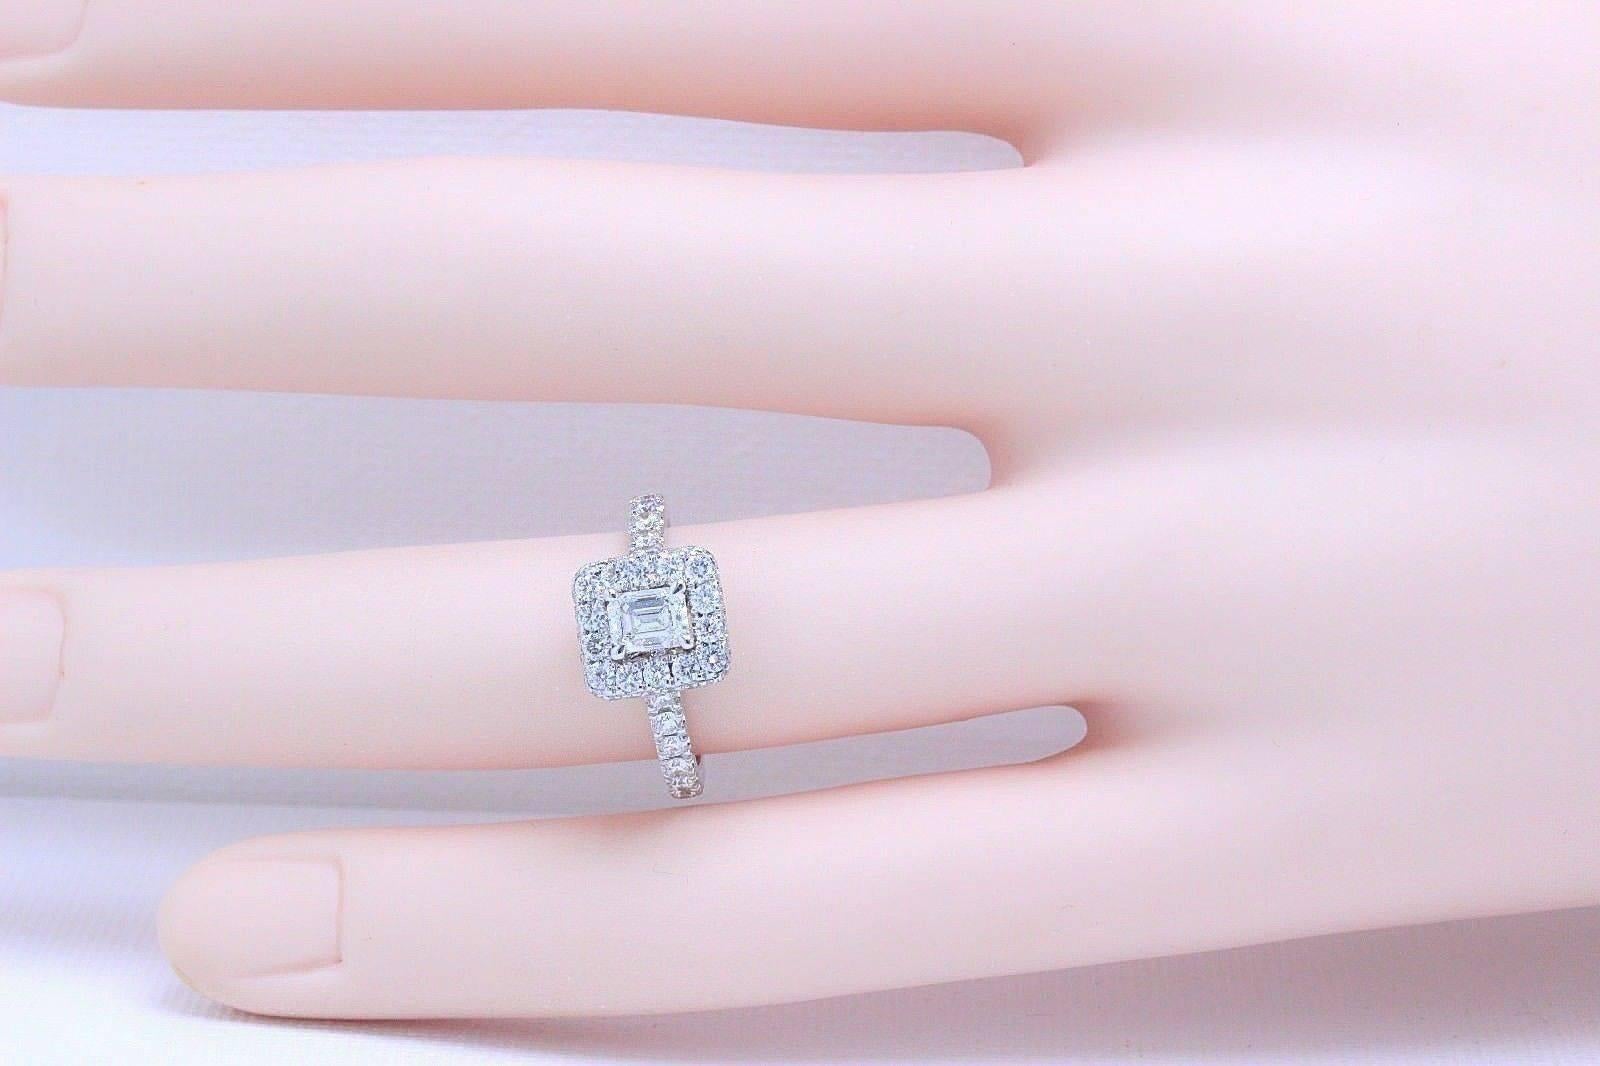 Neil Lane Diamond Engagement Ring Emerald Cut 1.375 Carat in 14 Karat White Gold For Sale 1